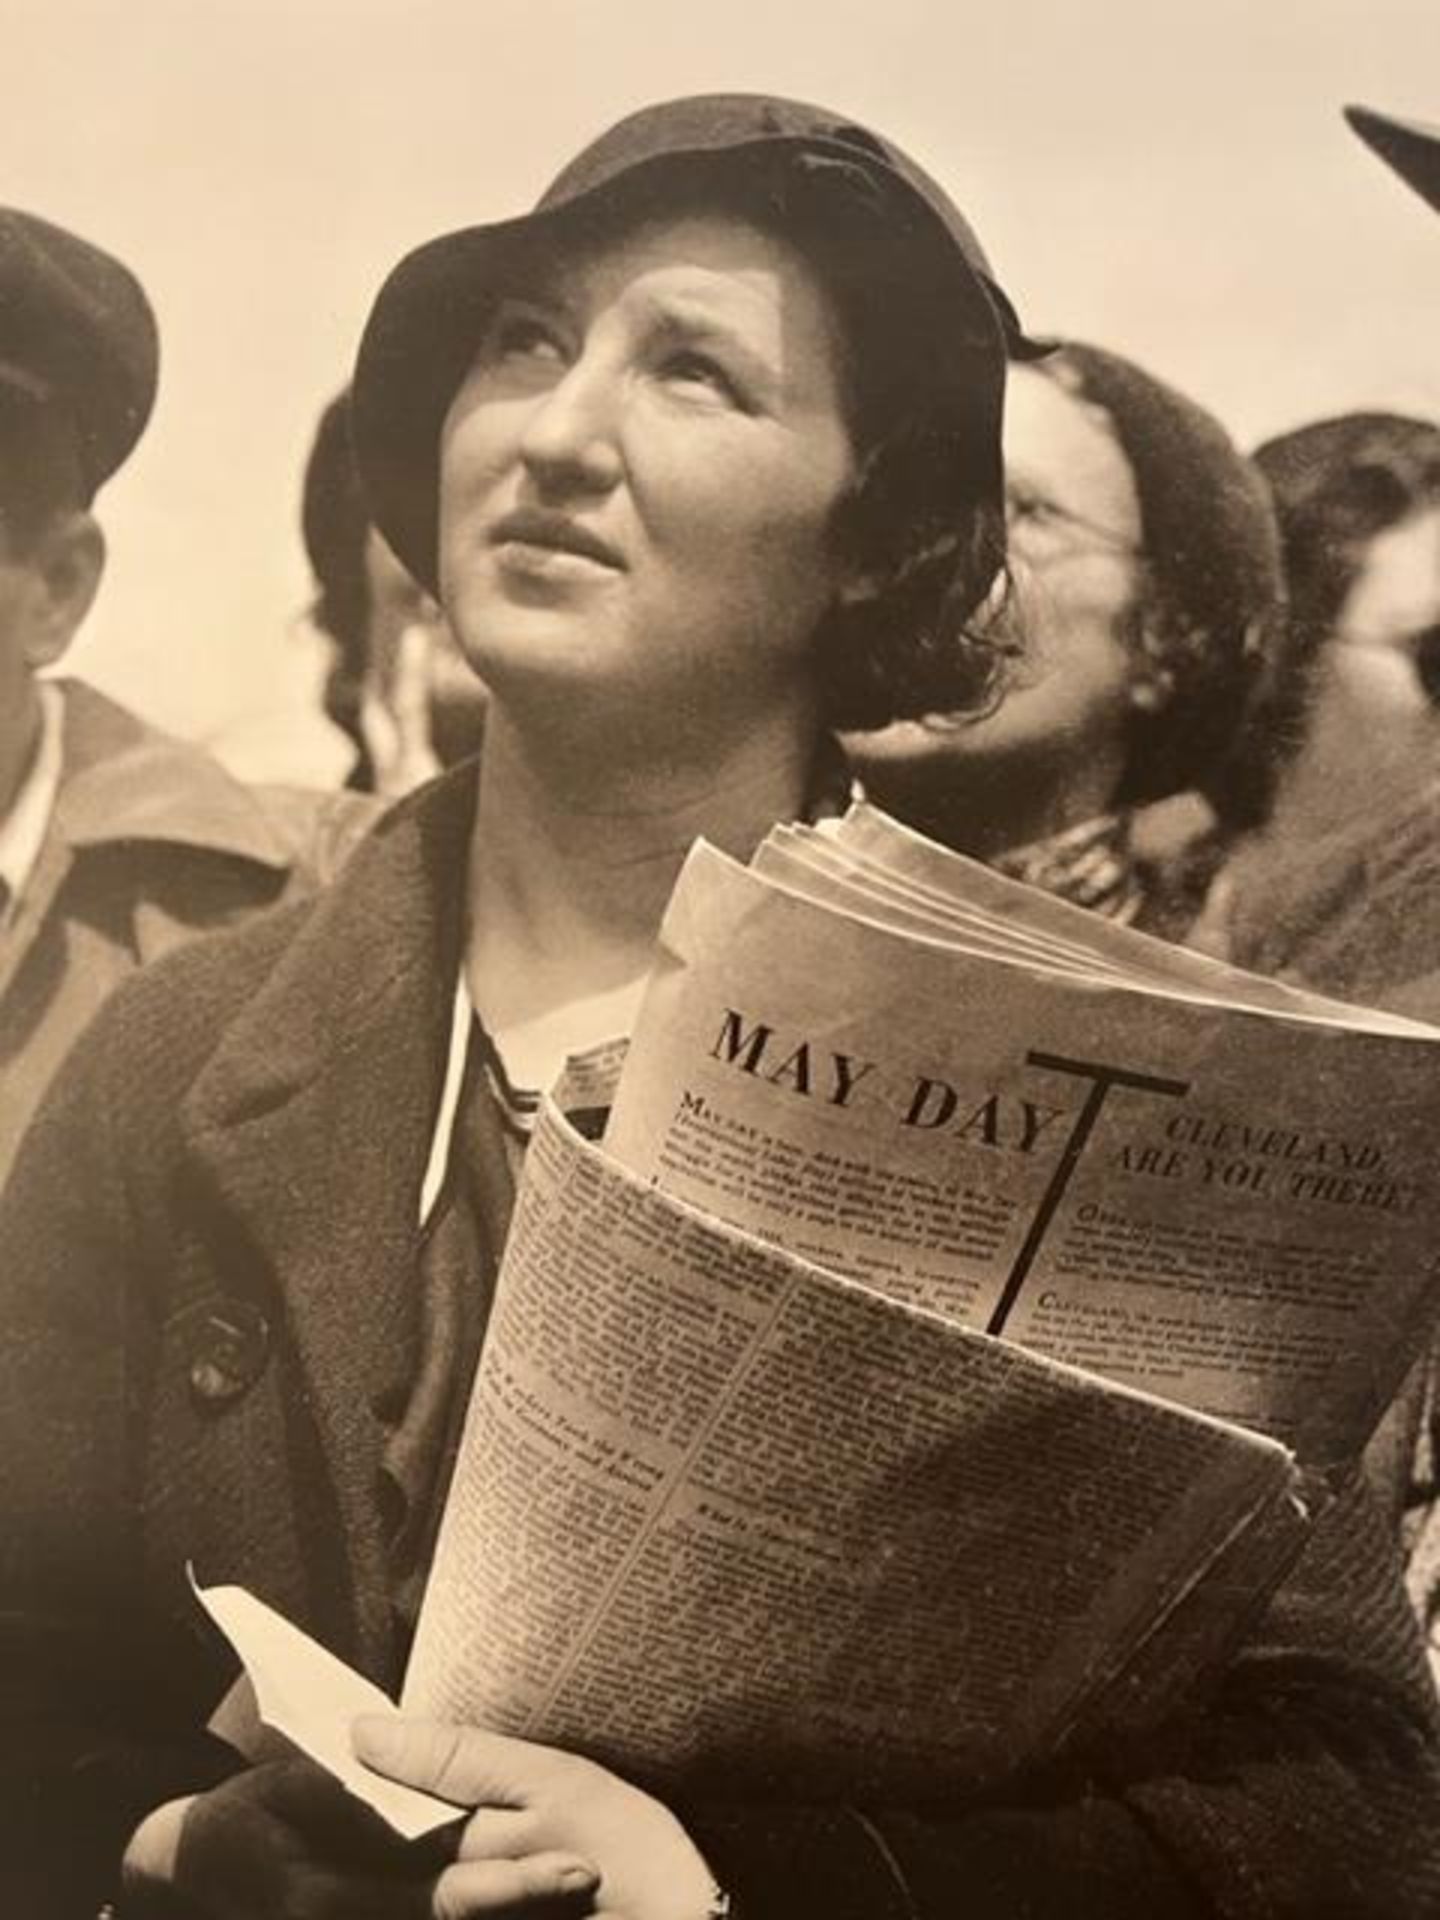 Dorothea Lange "May Day Listener" Print.